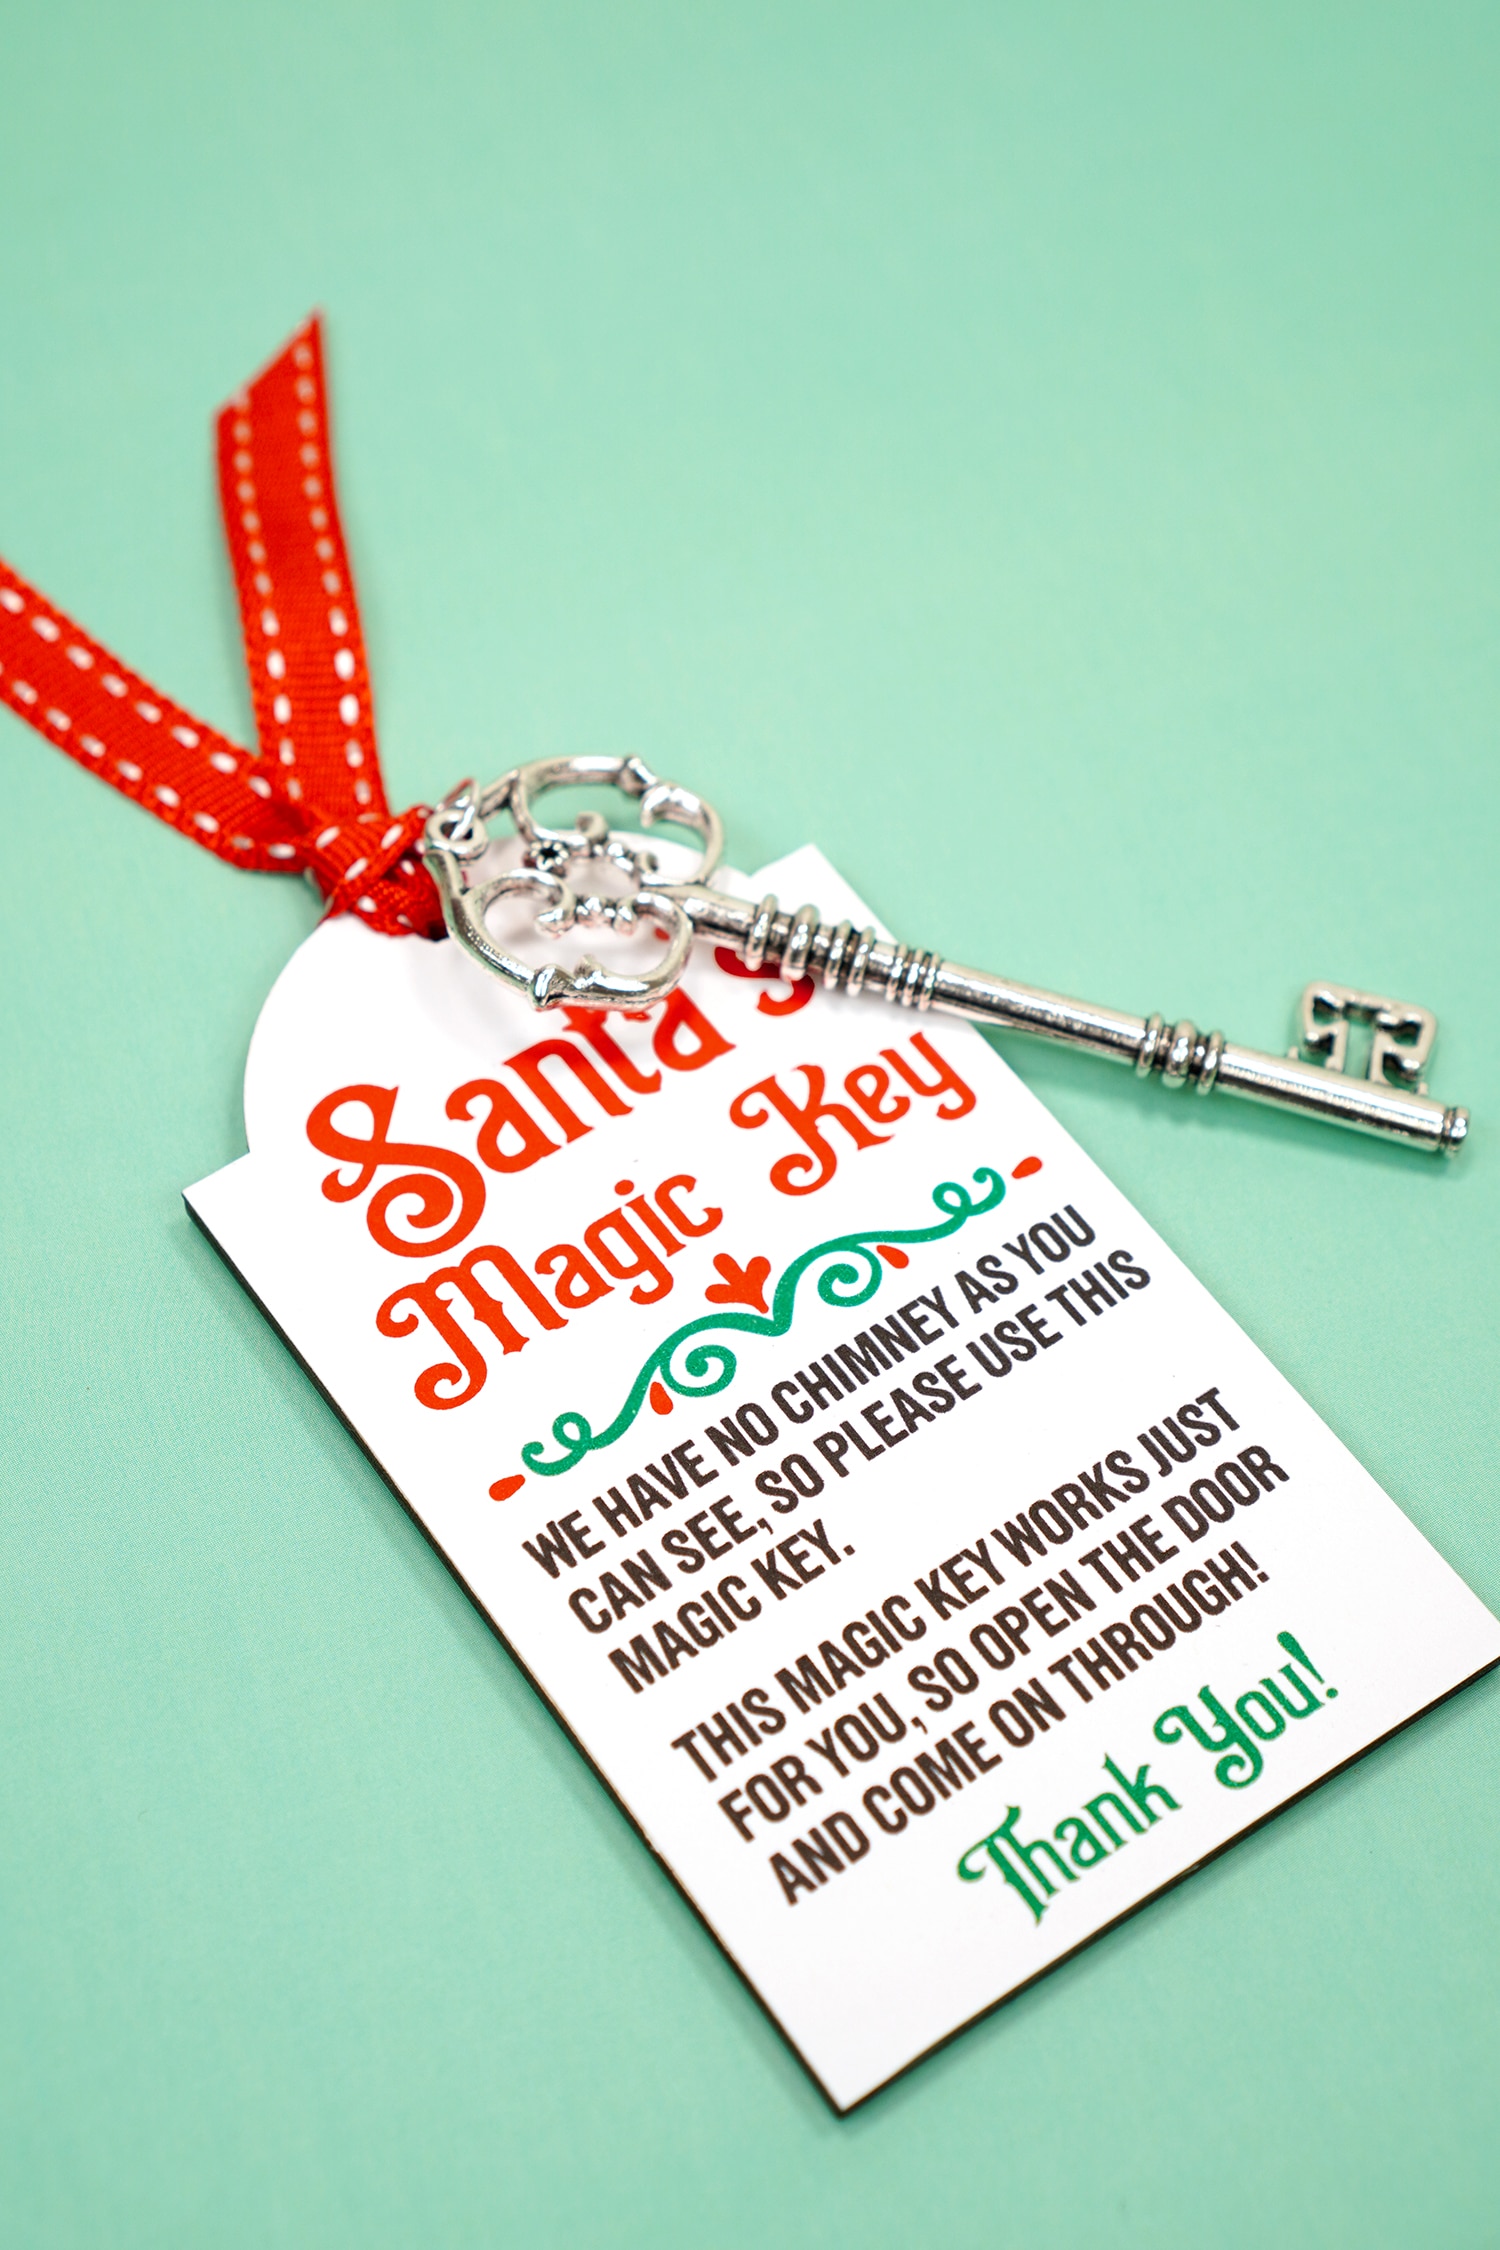 Magic Santa Key how-to with FREE Printable poem